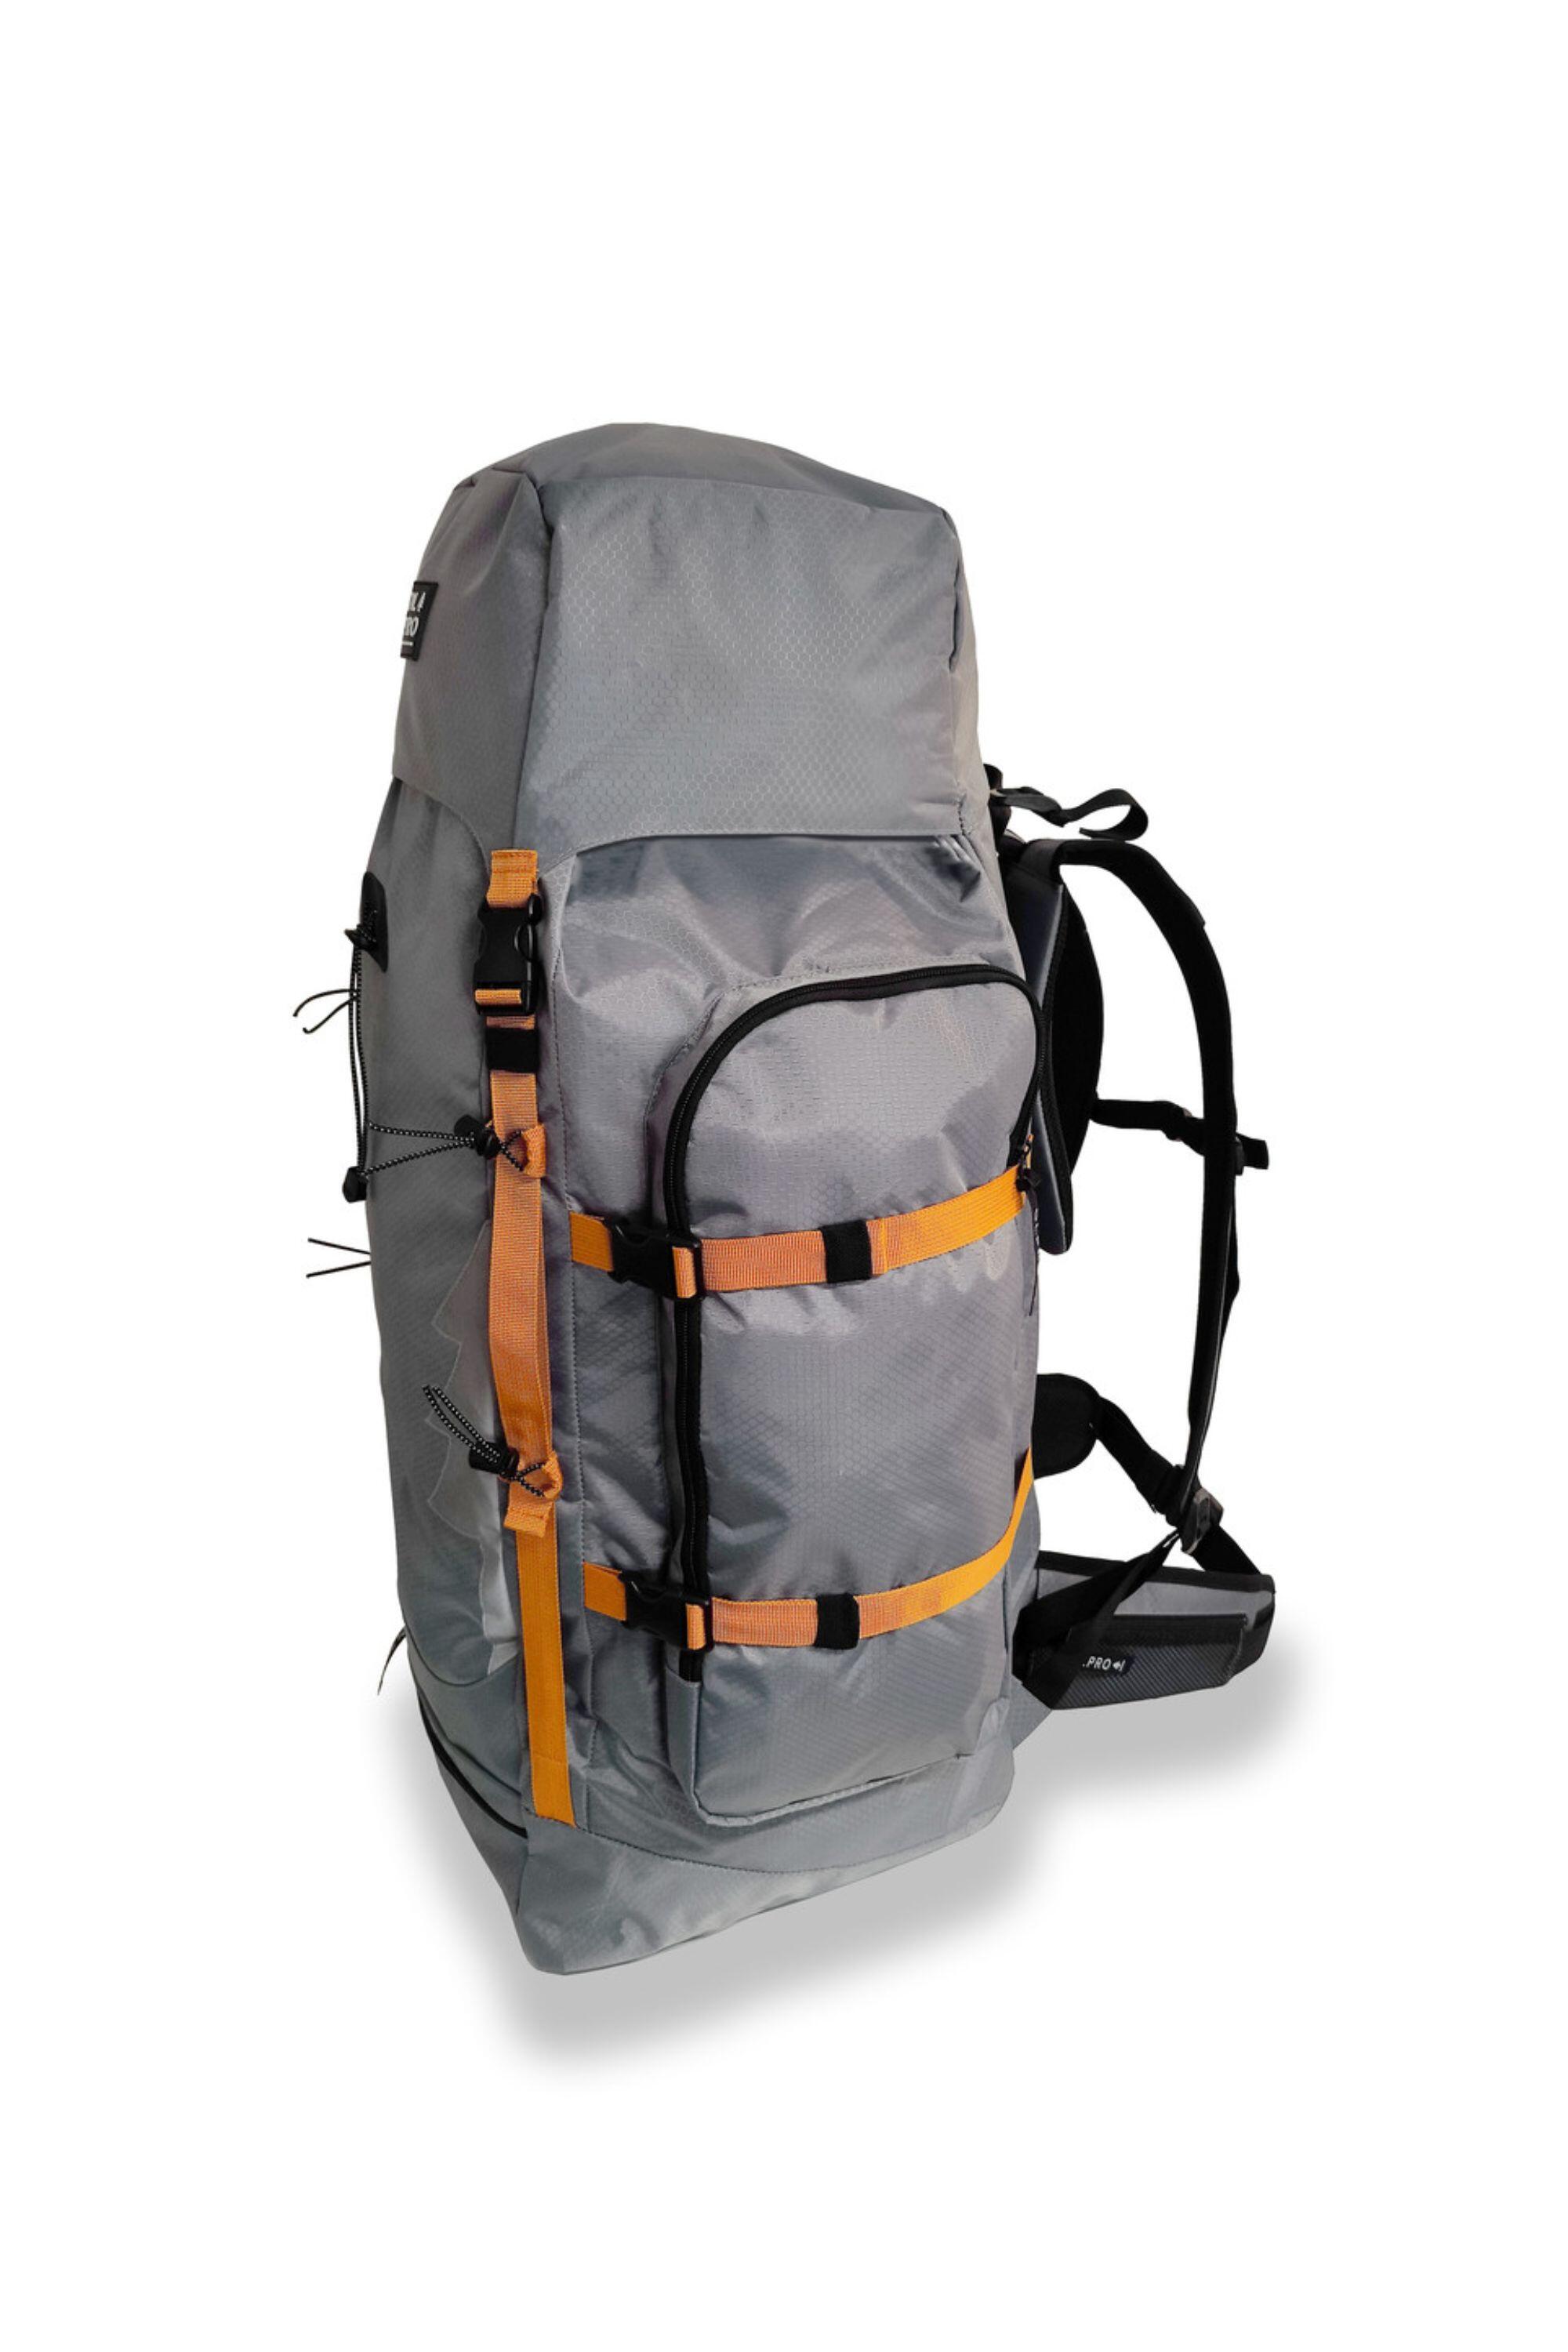 OLPRO 65L Rucksack Bag Grey 3/5